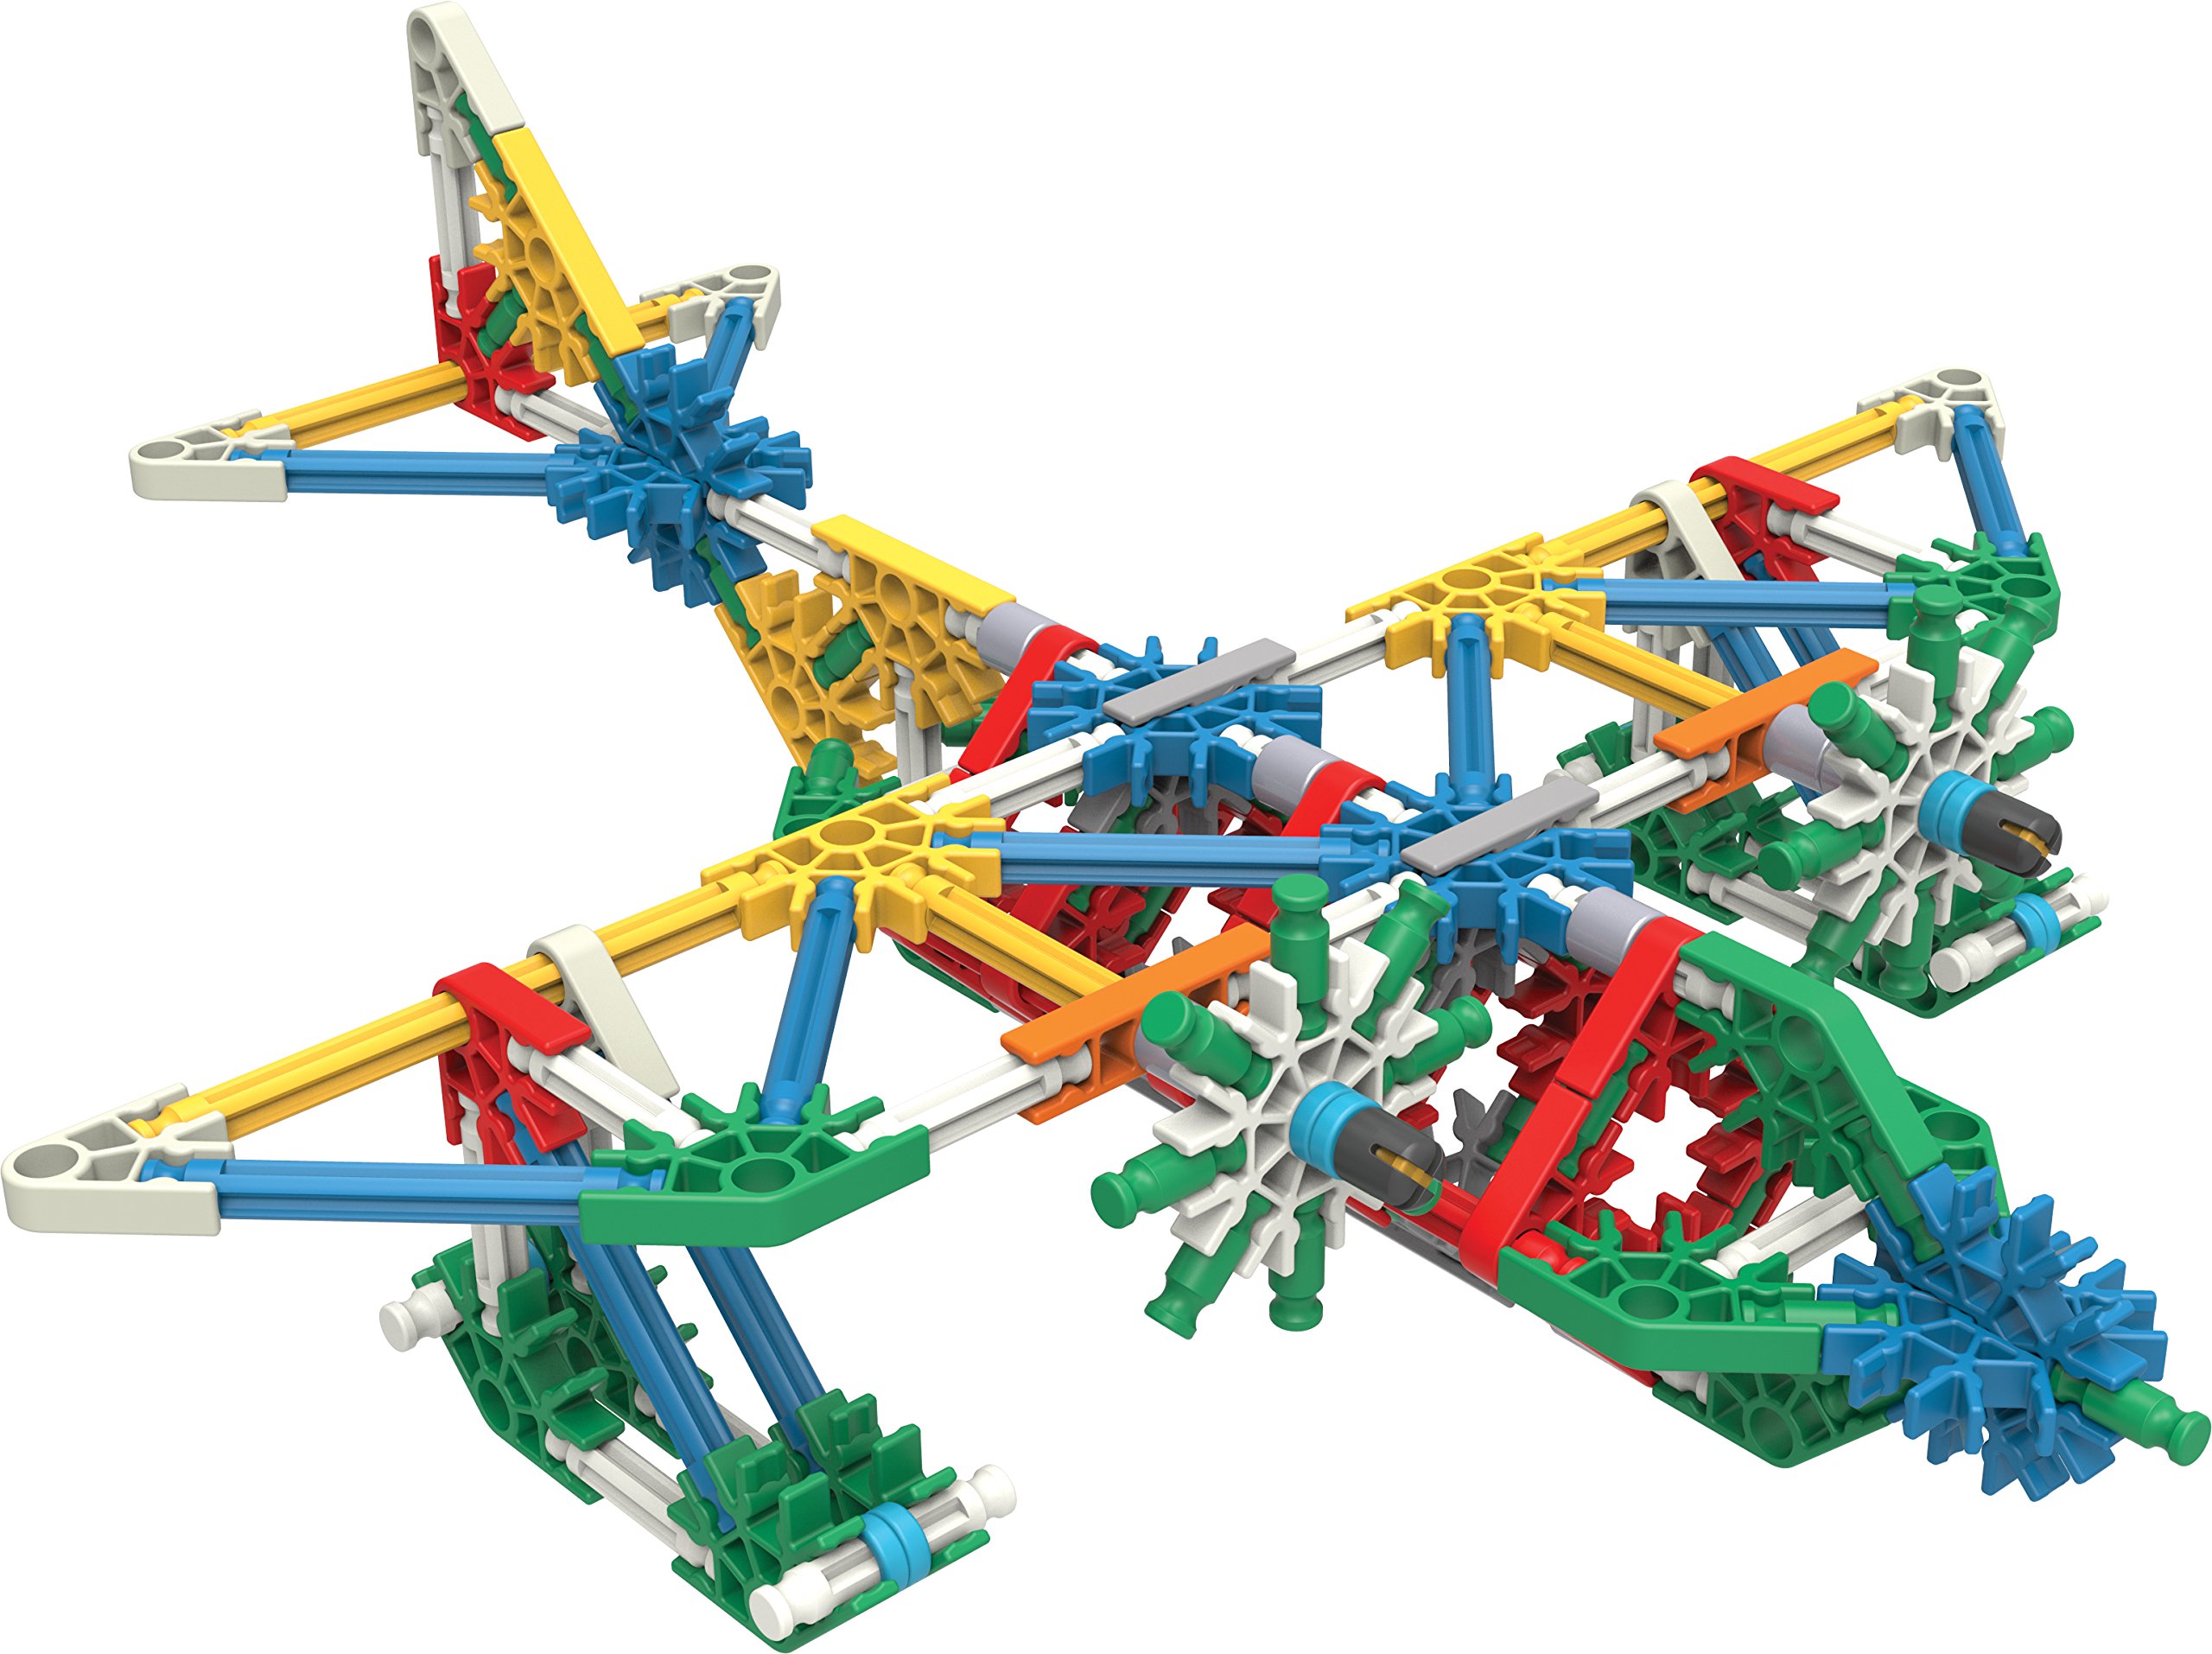 K'NEX 70 Model Building Set - 705 Pieces - Ages 7+ Engineering Education Toy (Amazon Exclusive)